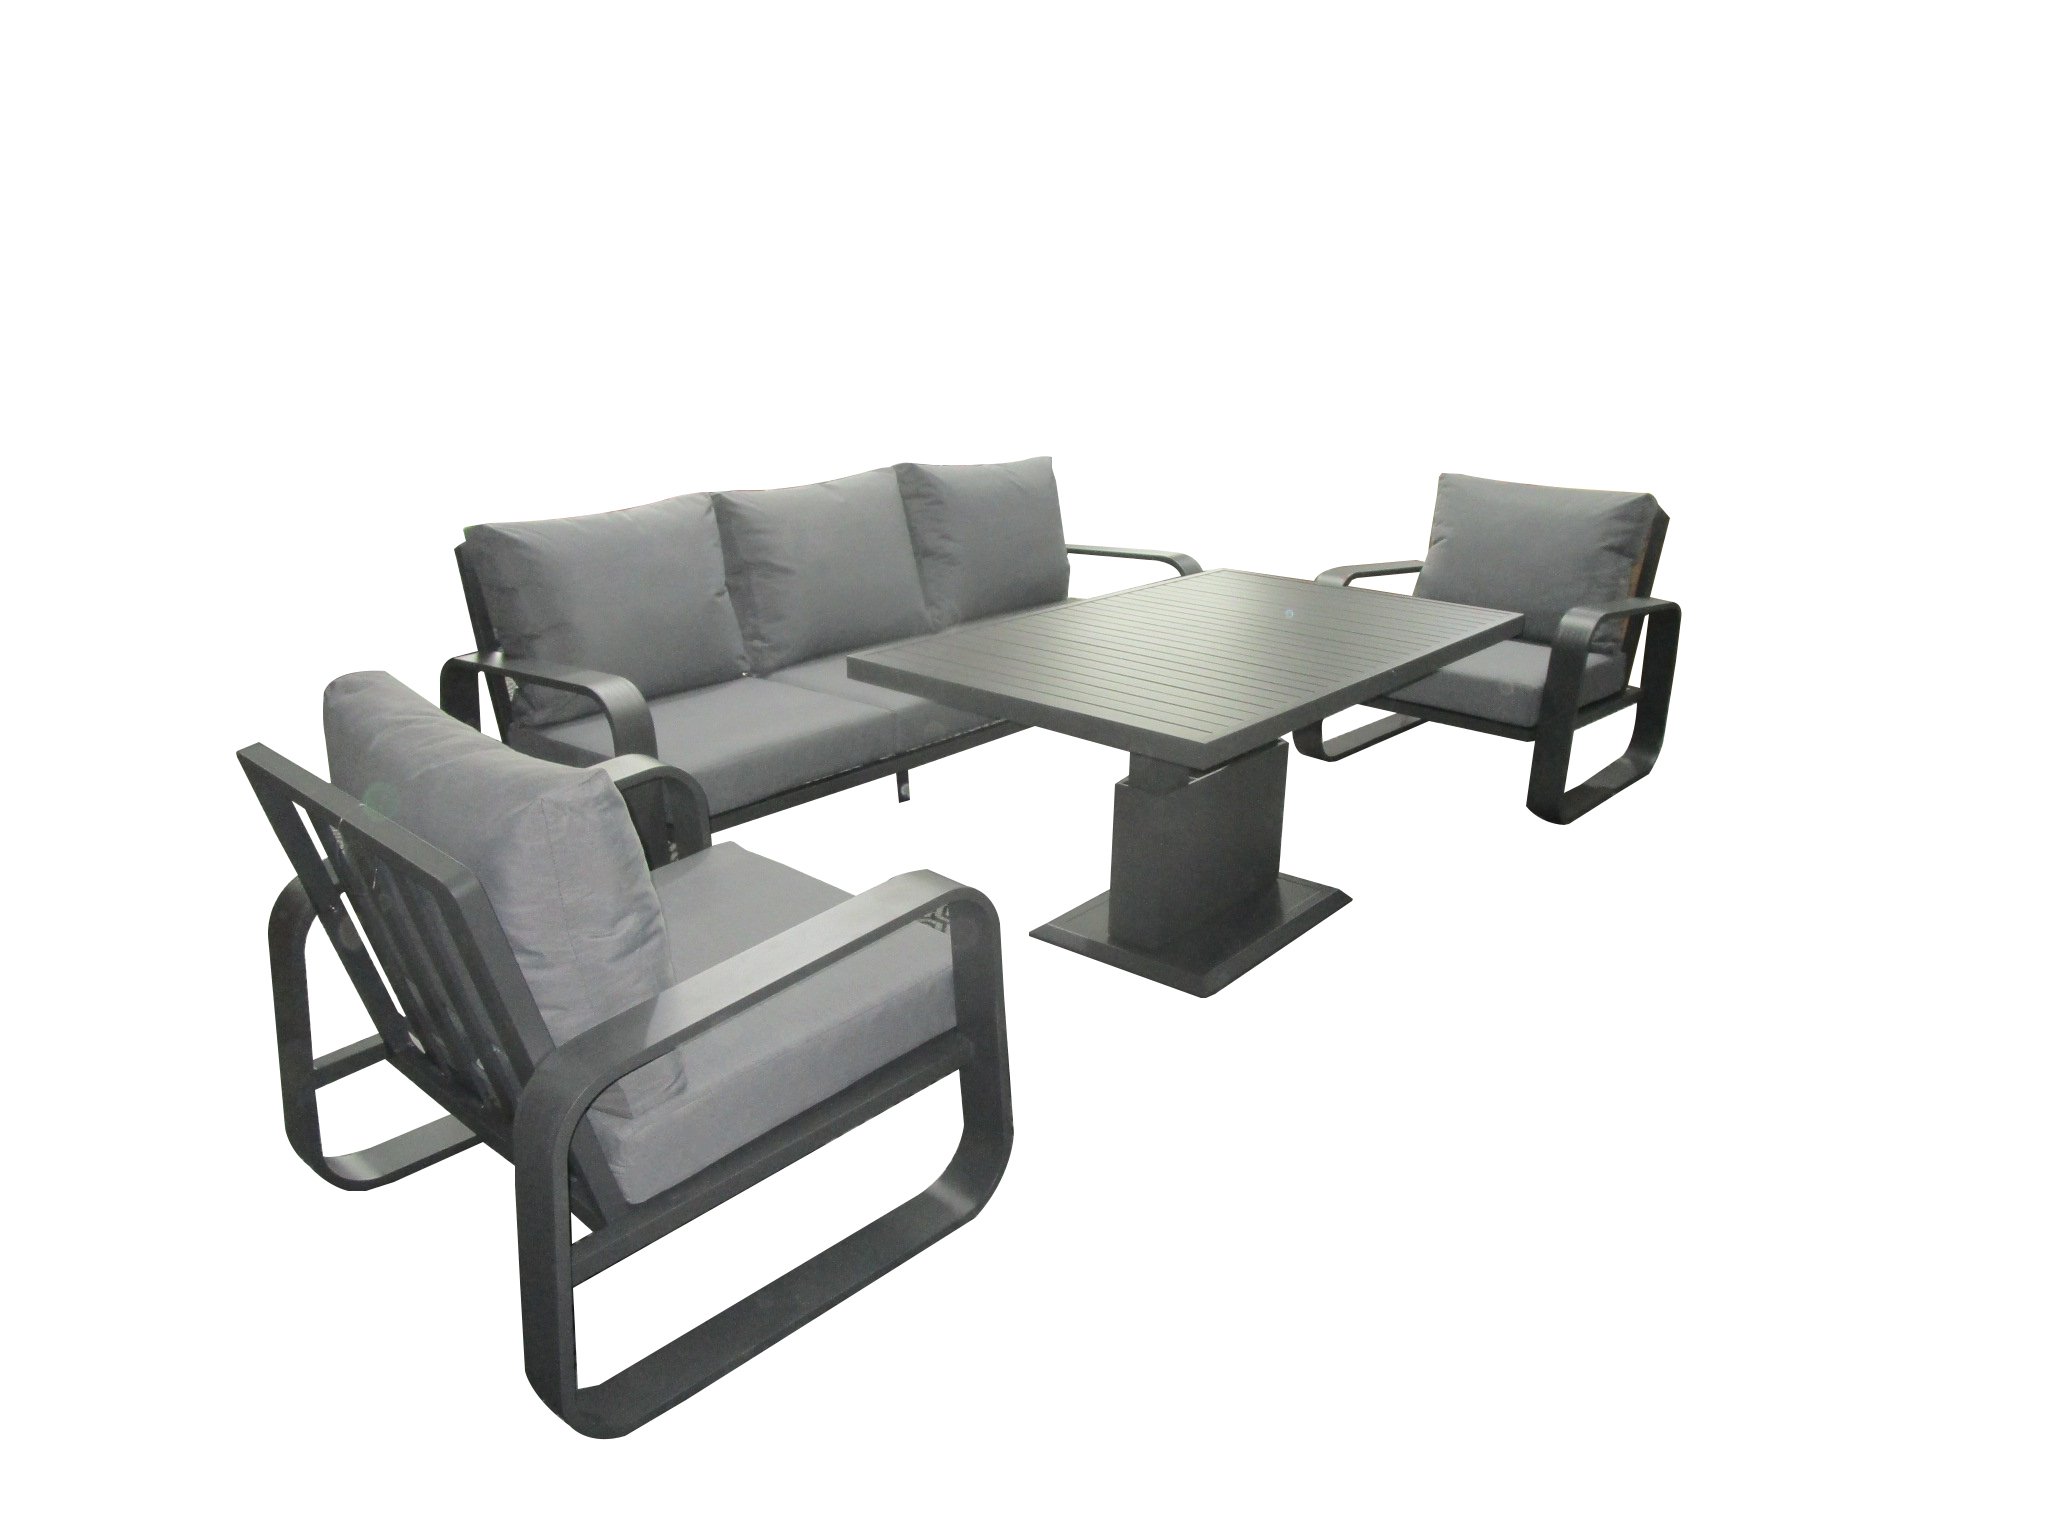 Image of Norfolk Leisure Babingley 3 Seat Aluminium Lounge with High Gas Adjustable Table (Grey)